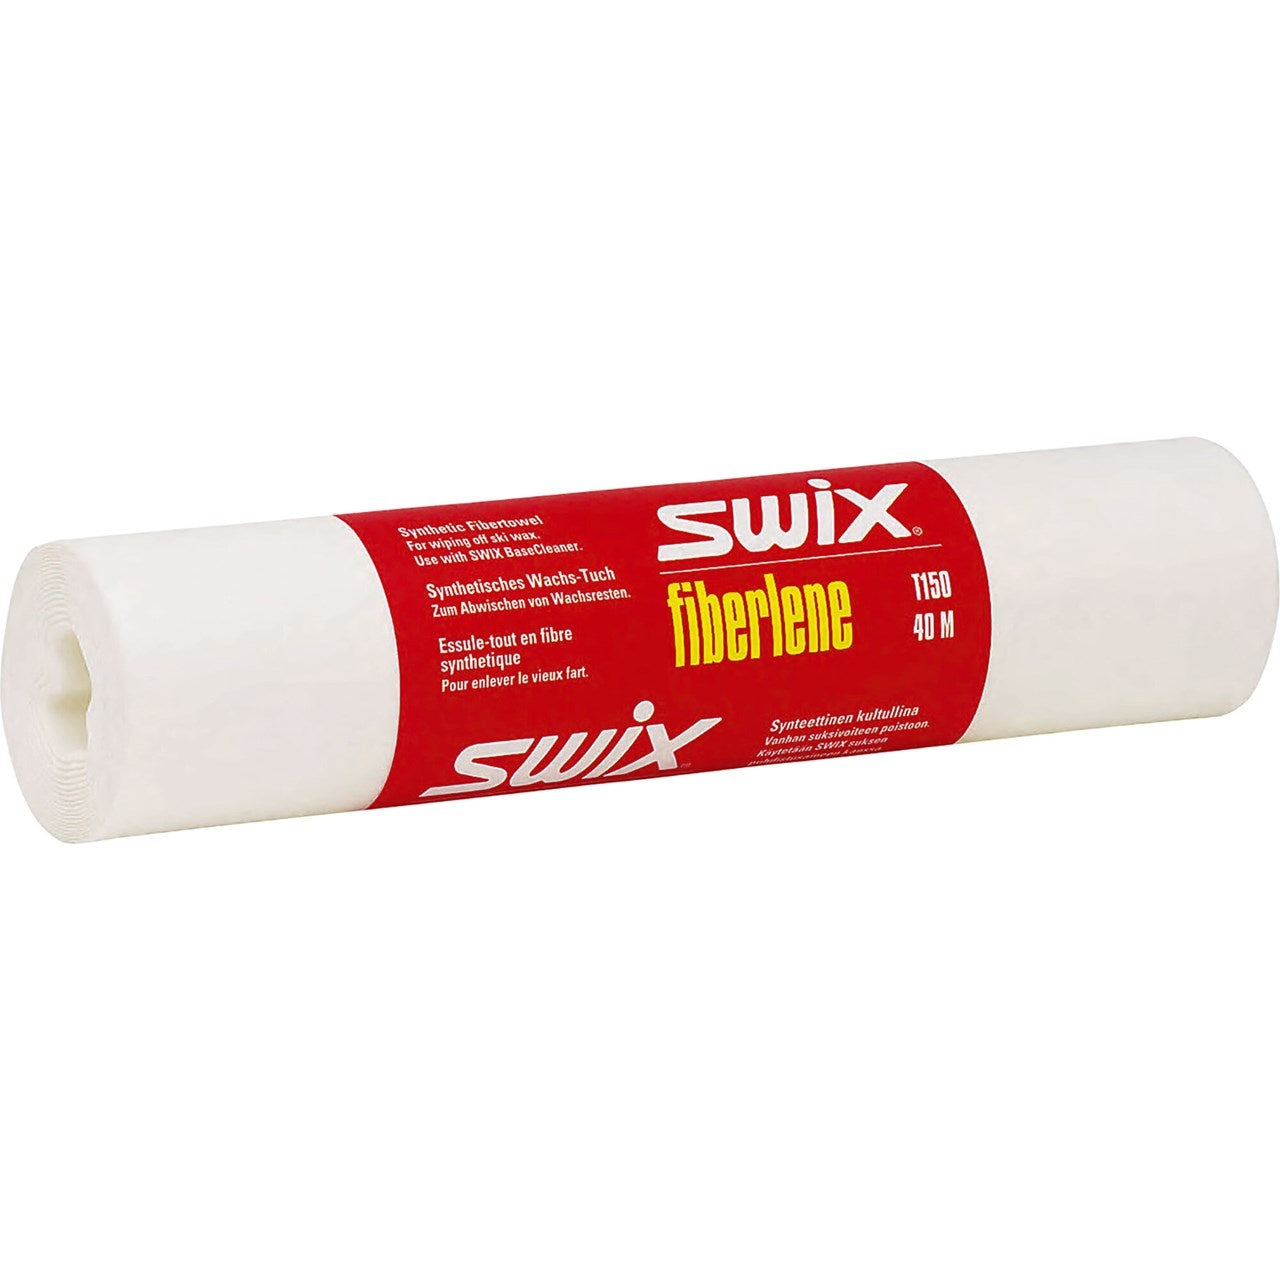 Swix Fiberlene Cleaning Towel 40m